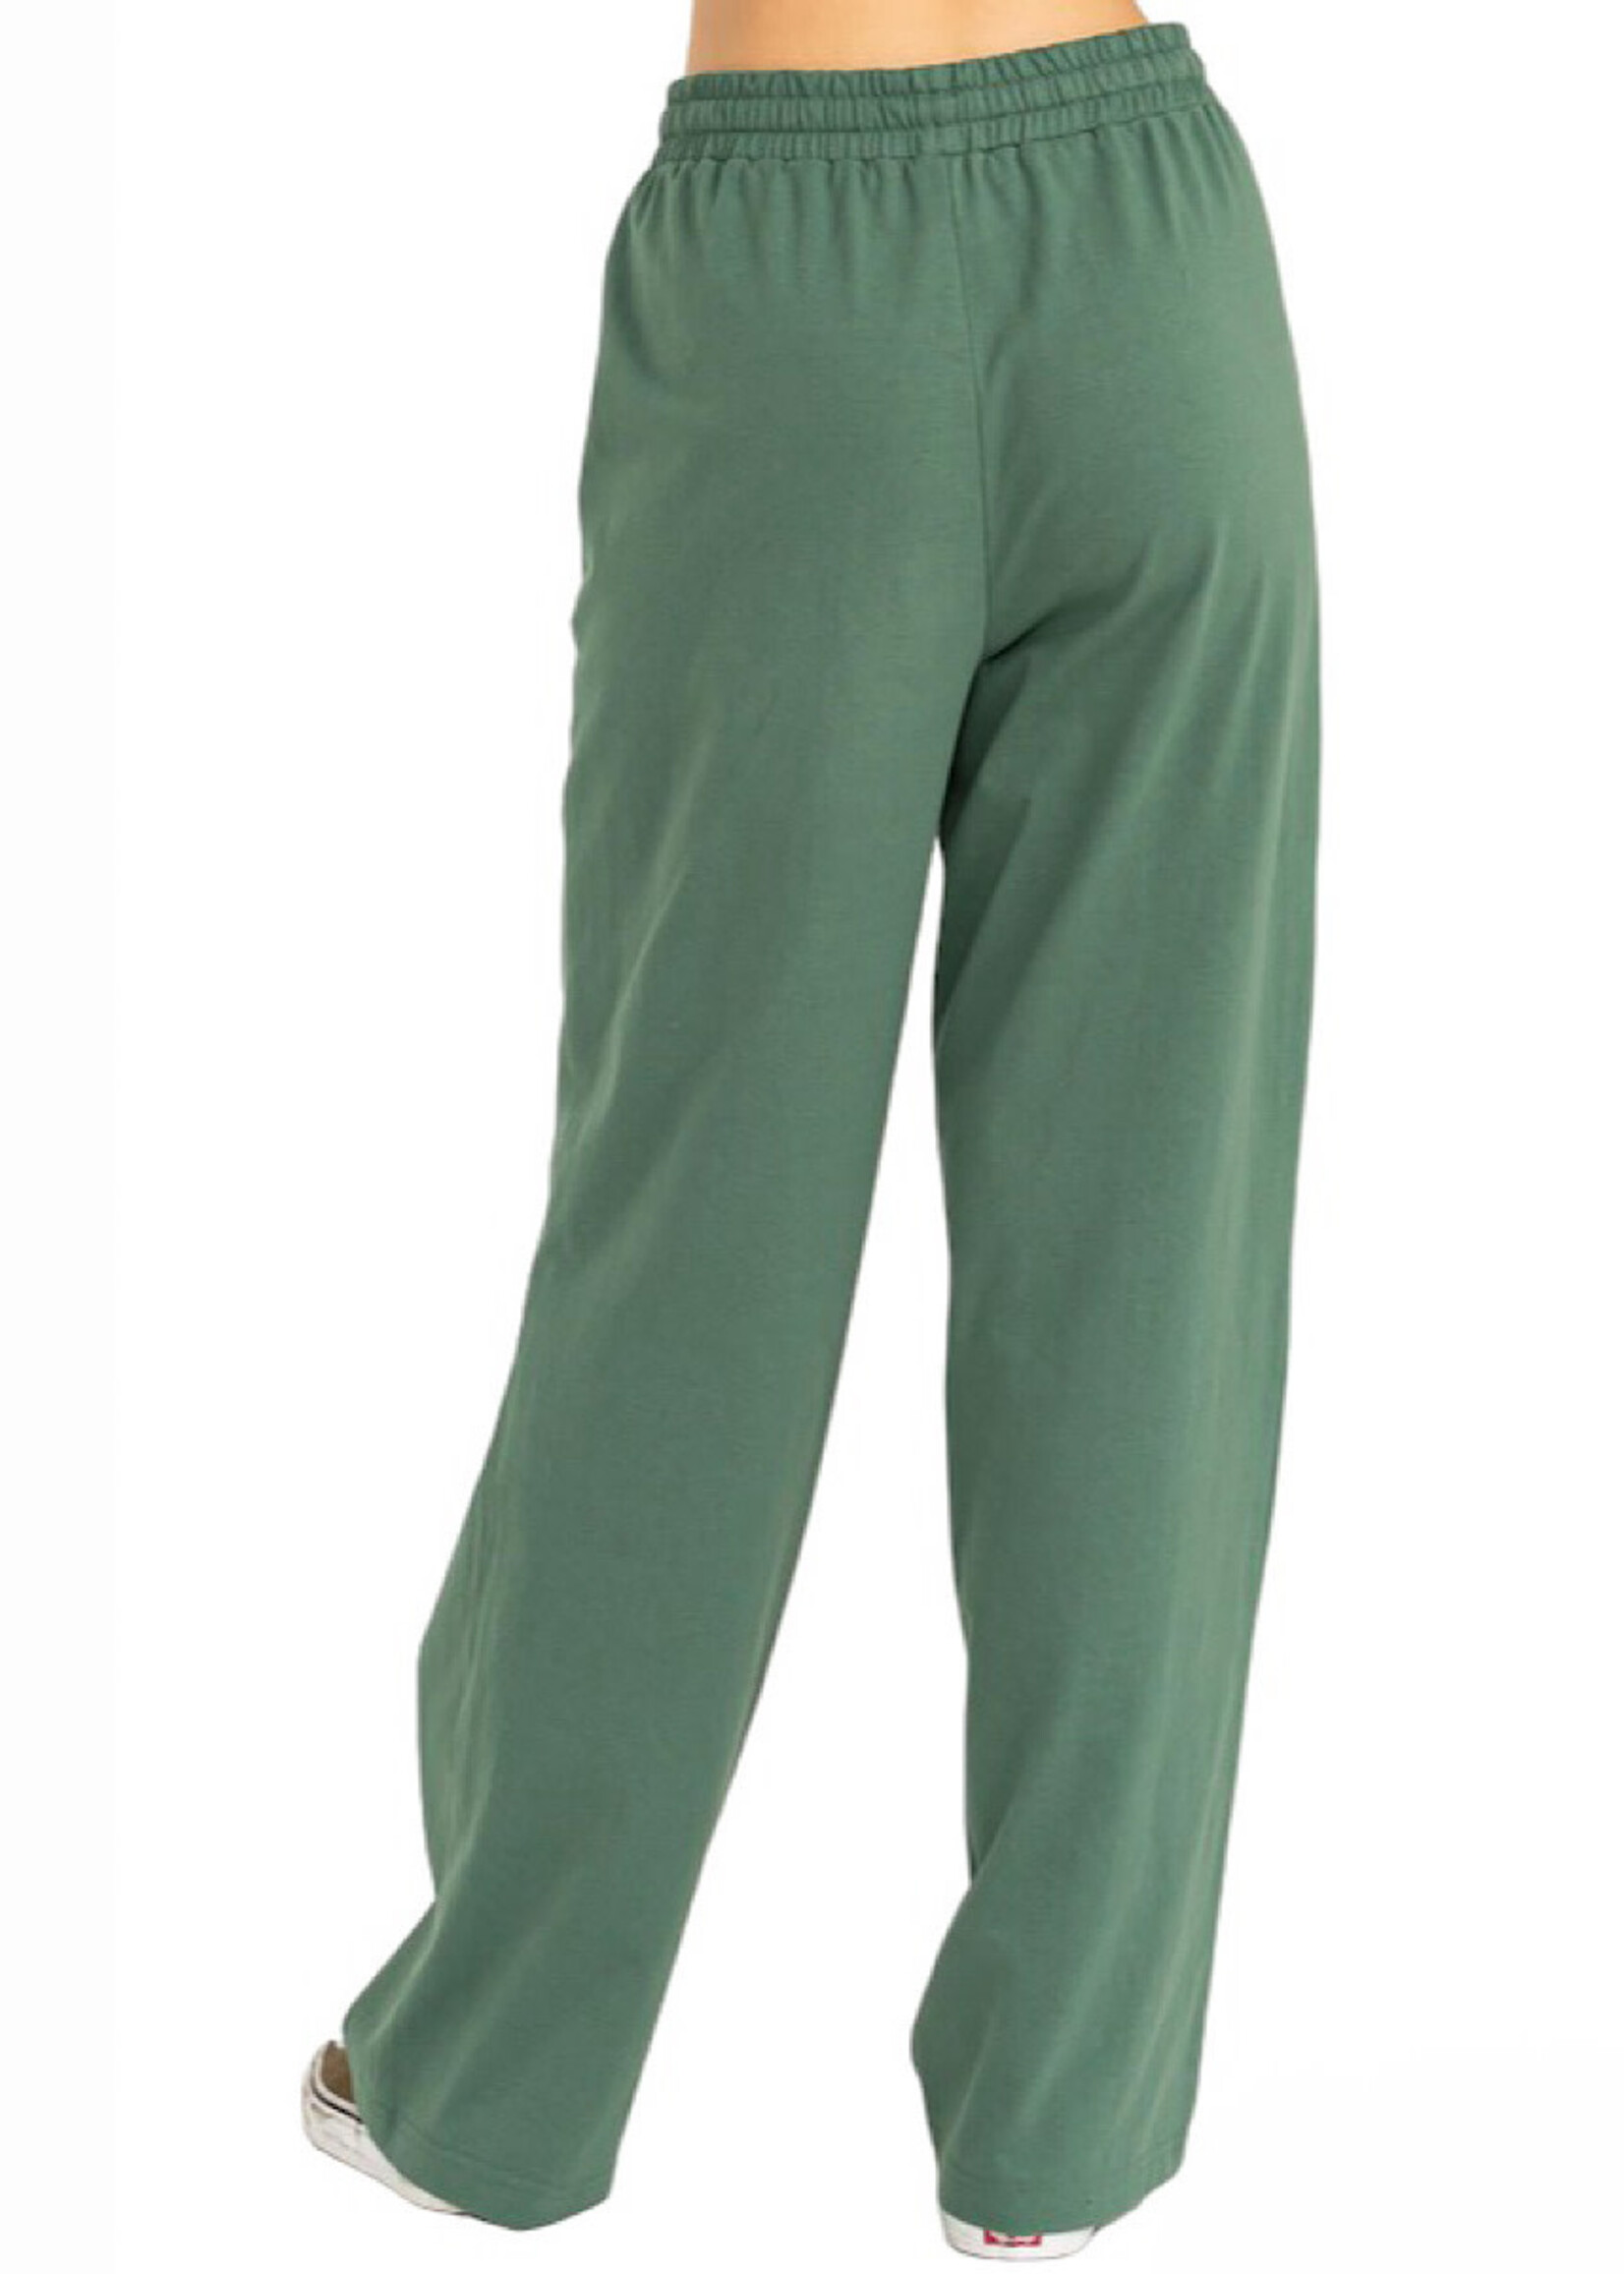 Green High Waist Drawstring Pants